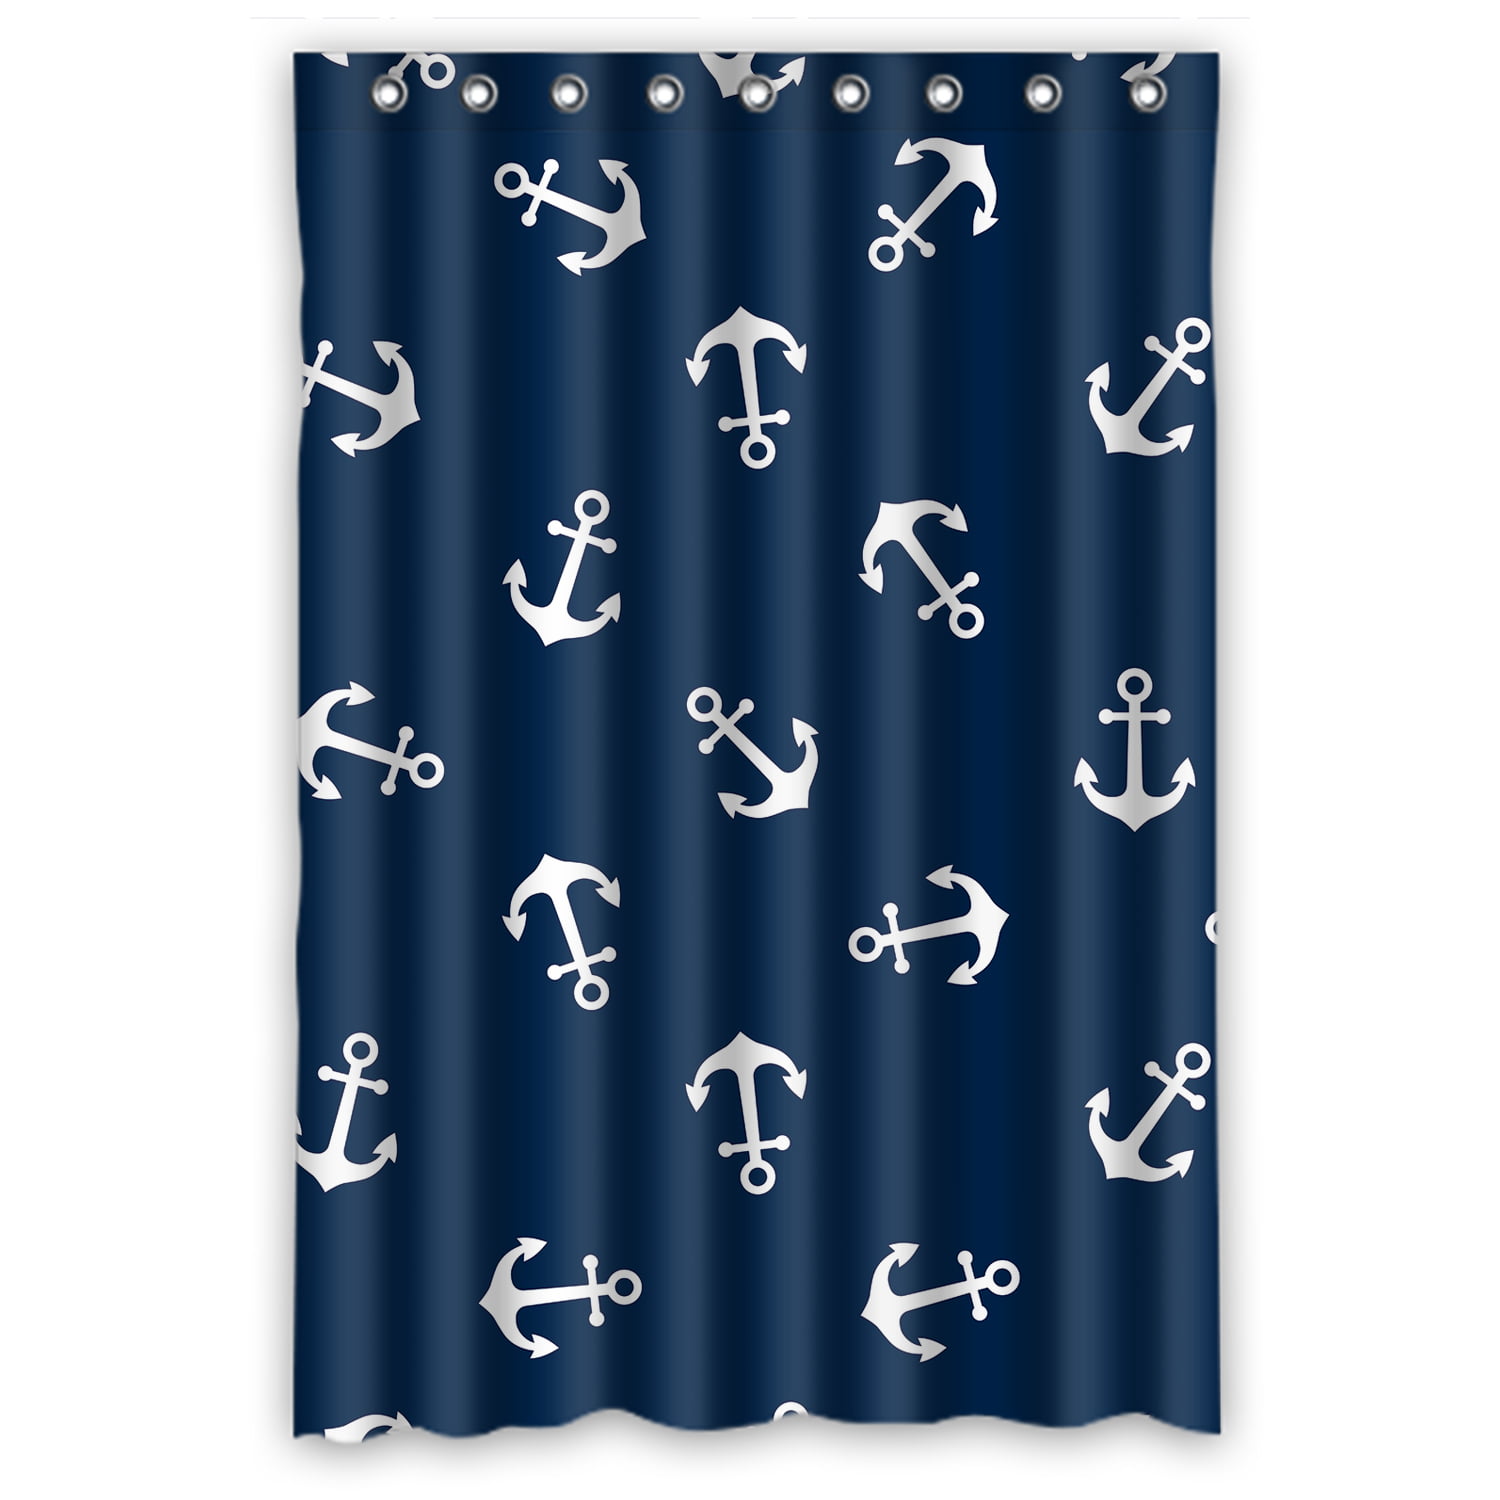 Nautical Anchor Rustic Wood Design Waterproof Mildew Resistant Bathroom Curtains Brown Turquoise 72 x 72 Inch goodbath Hookless Shower Curtain 